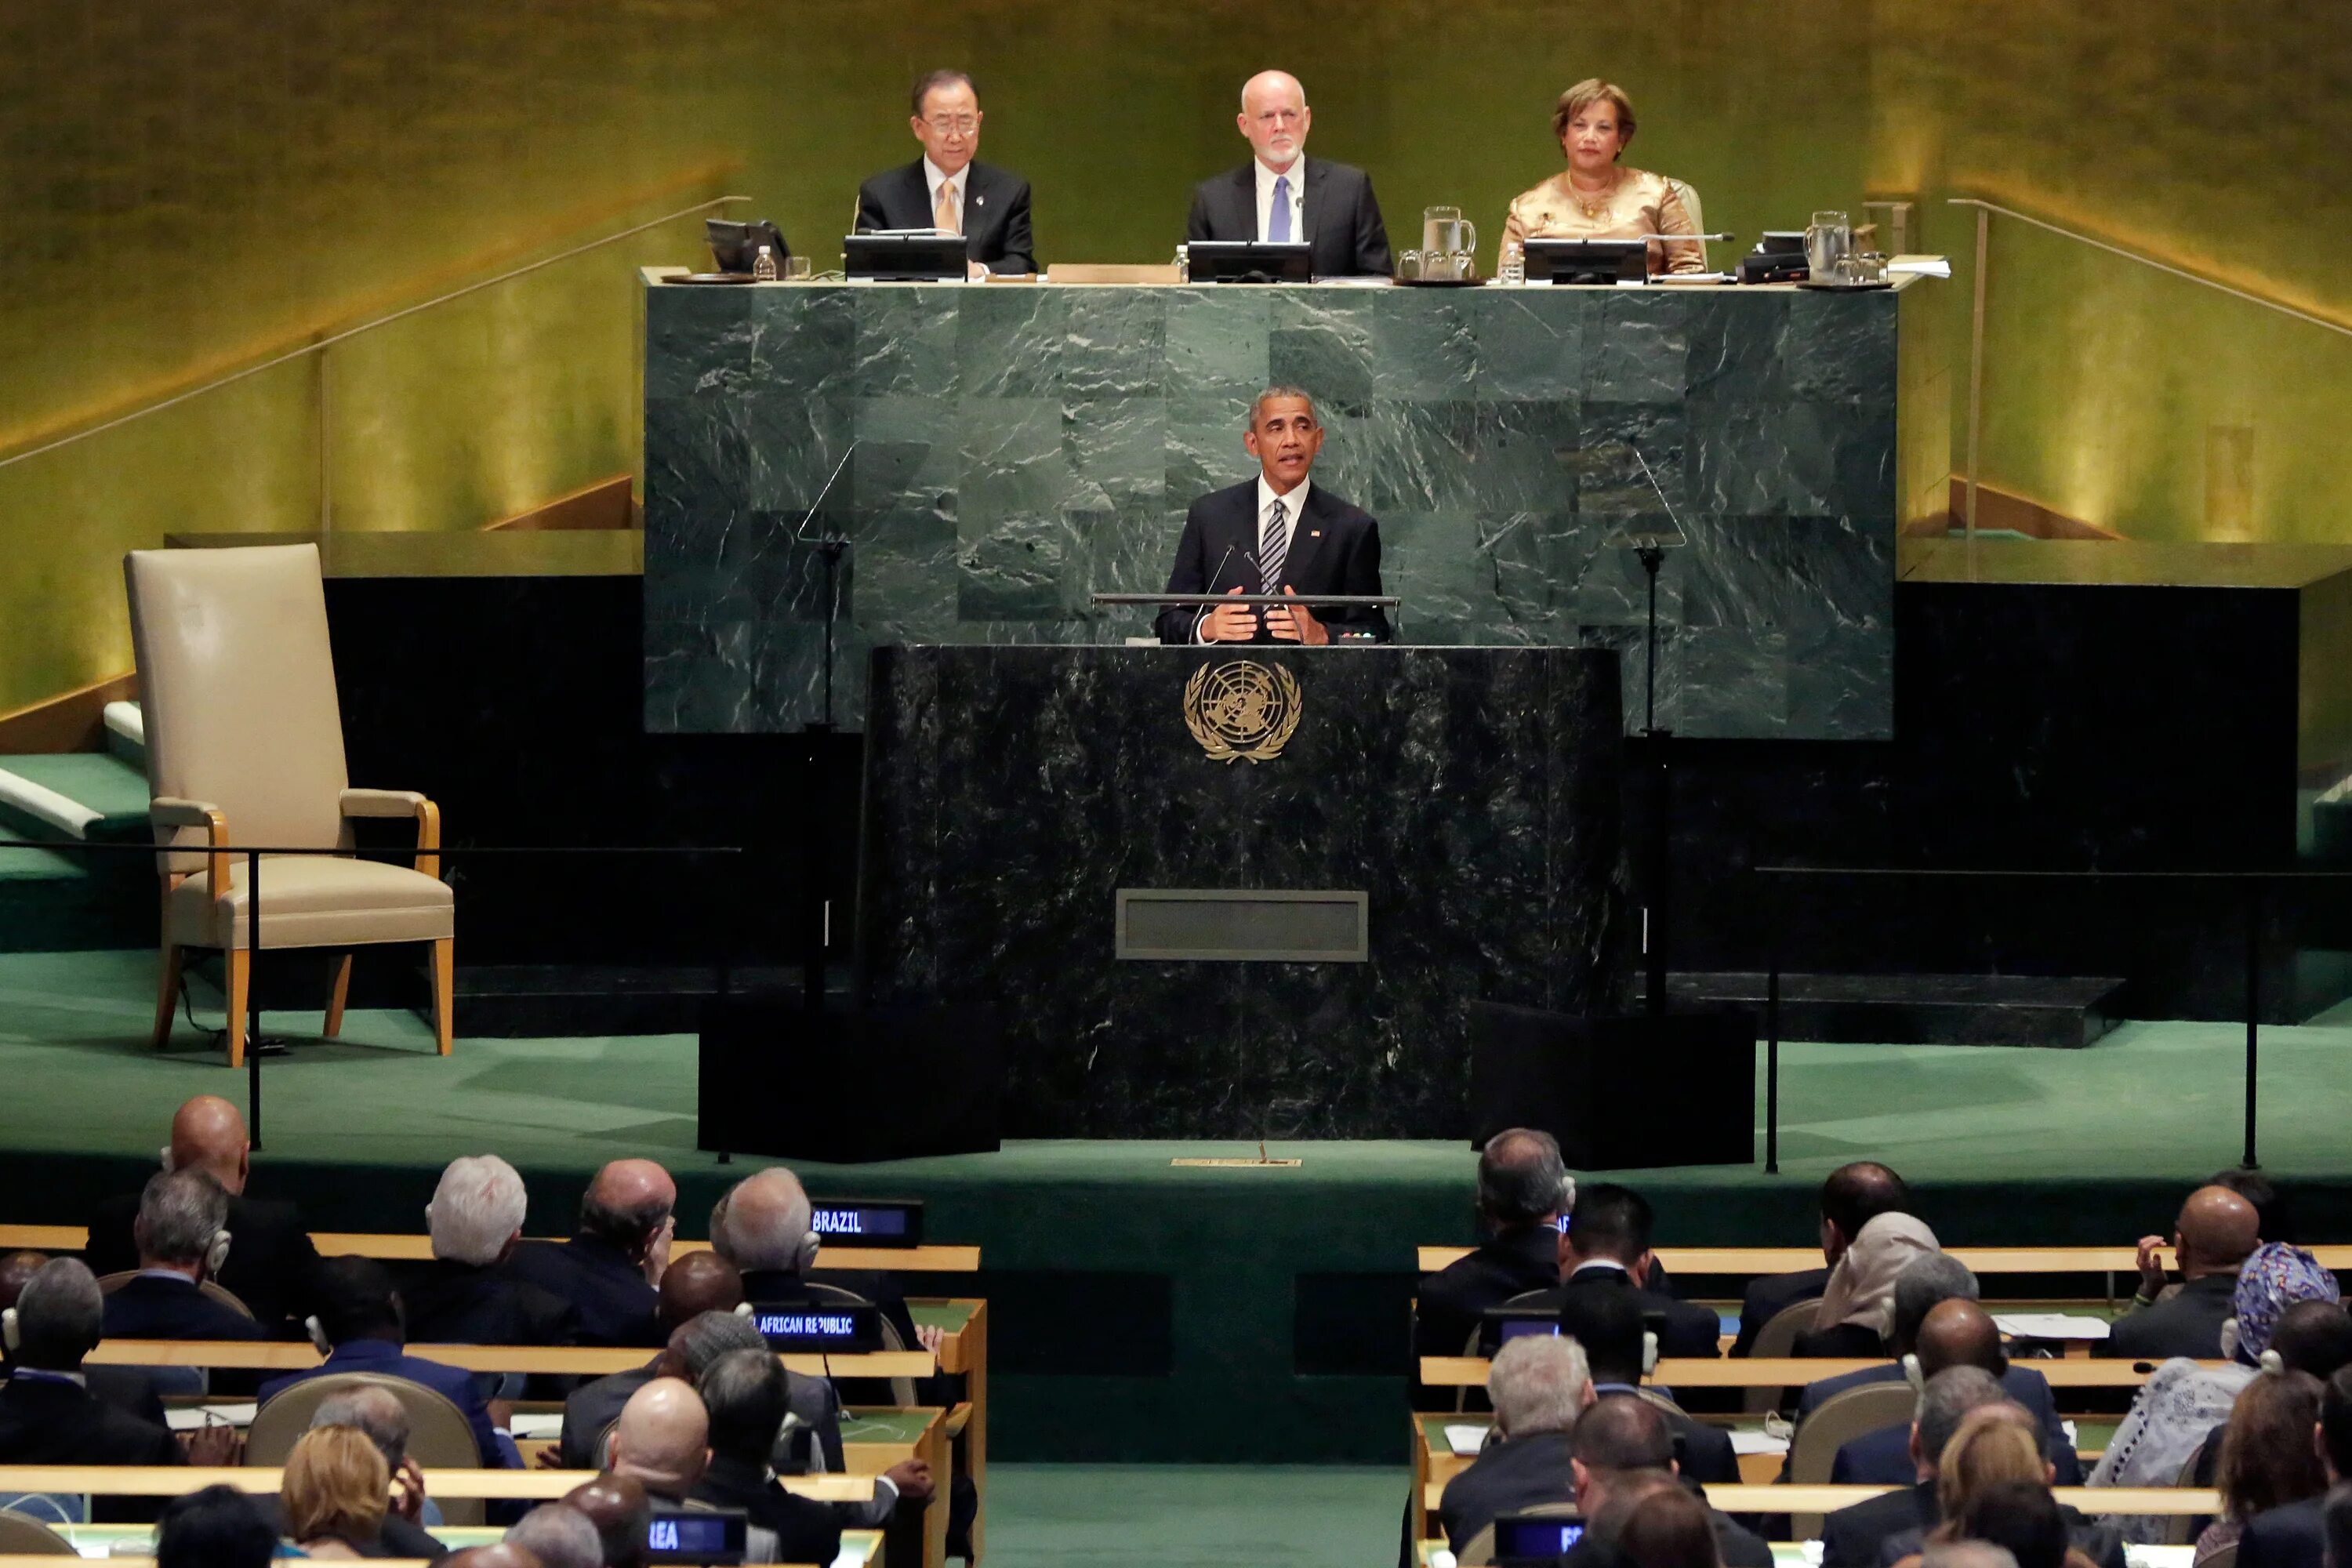 Трибуна оон. Трибуна Генассамблеи ООН. Выступающий ООН С трибуны. Трибуна ООН пустая. Фото трибуны ООН.